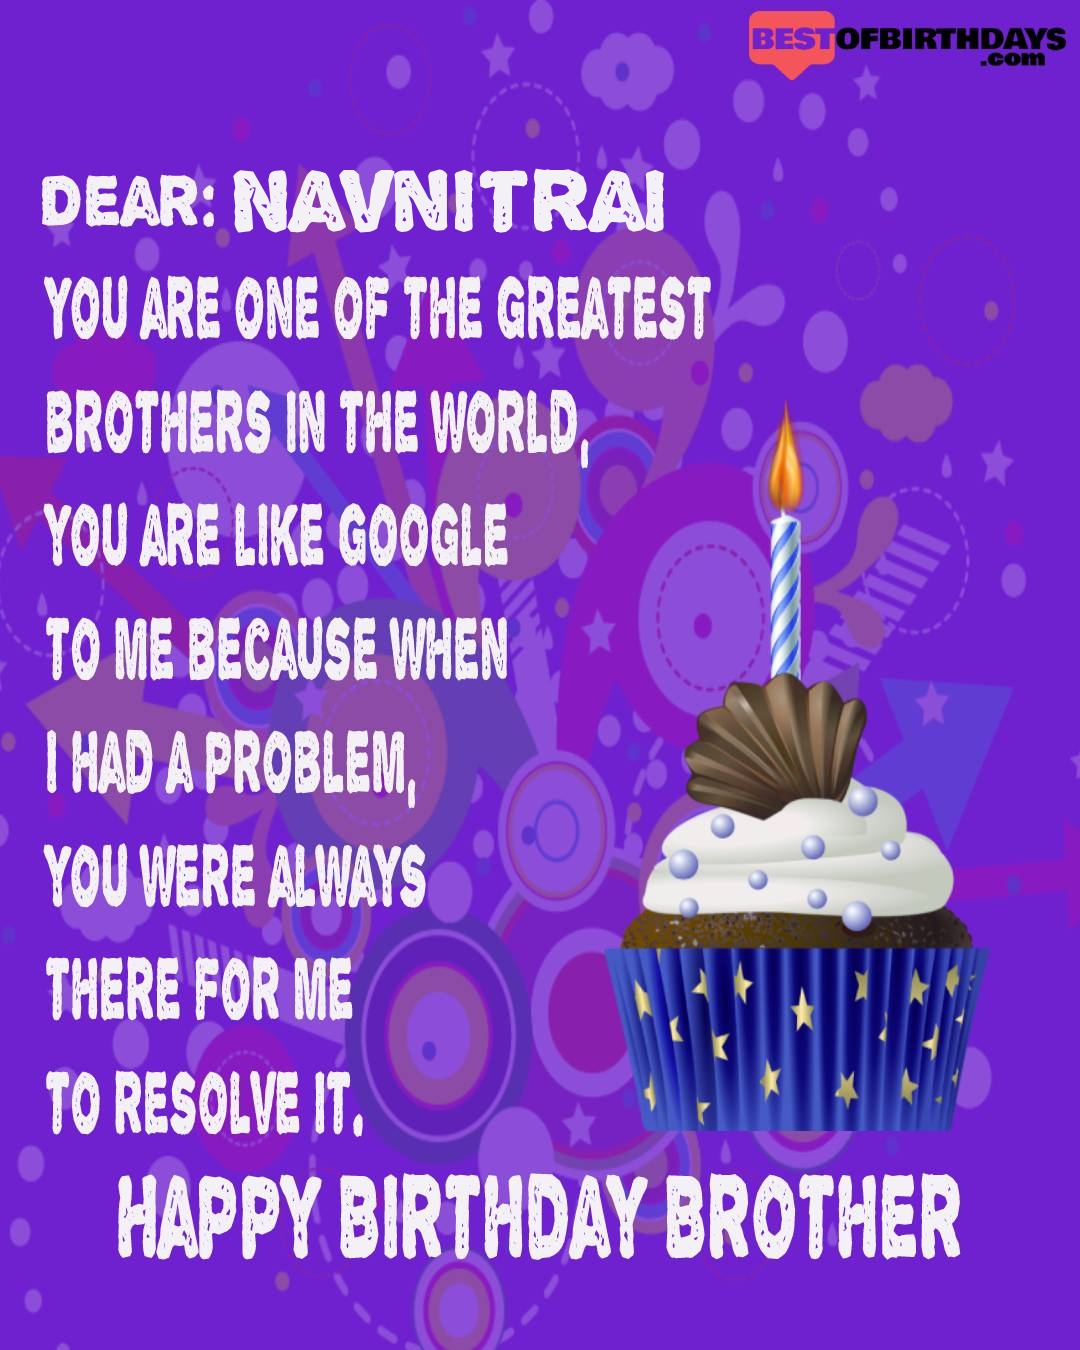 Happy birthday navnitrai bhai brother bro